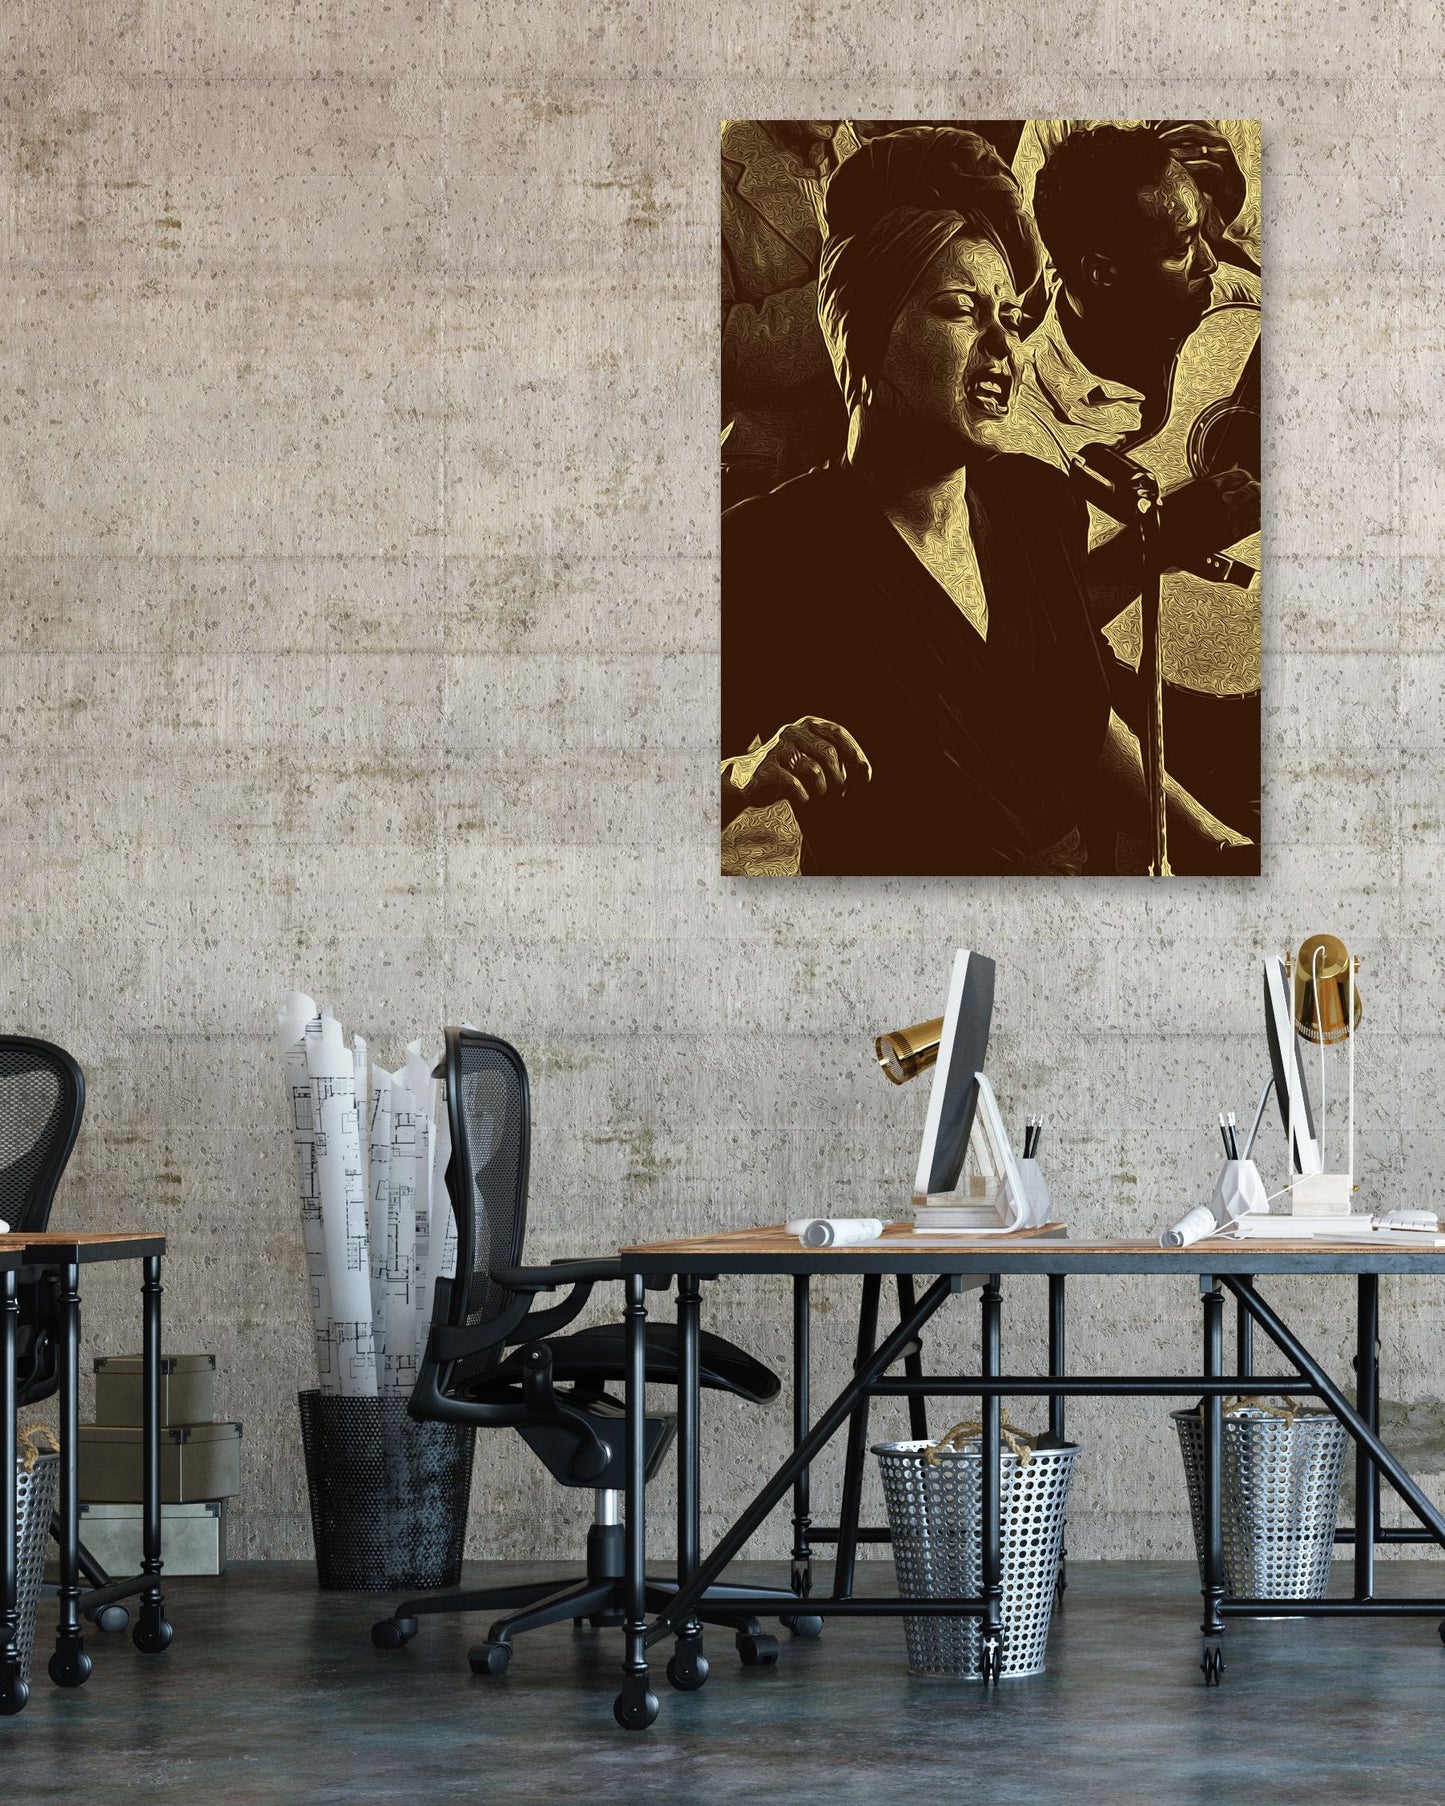 Billie Holiday Retro Vintage #6 - @oizyproduction